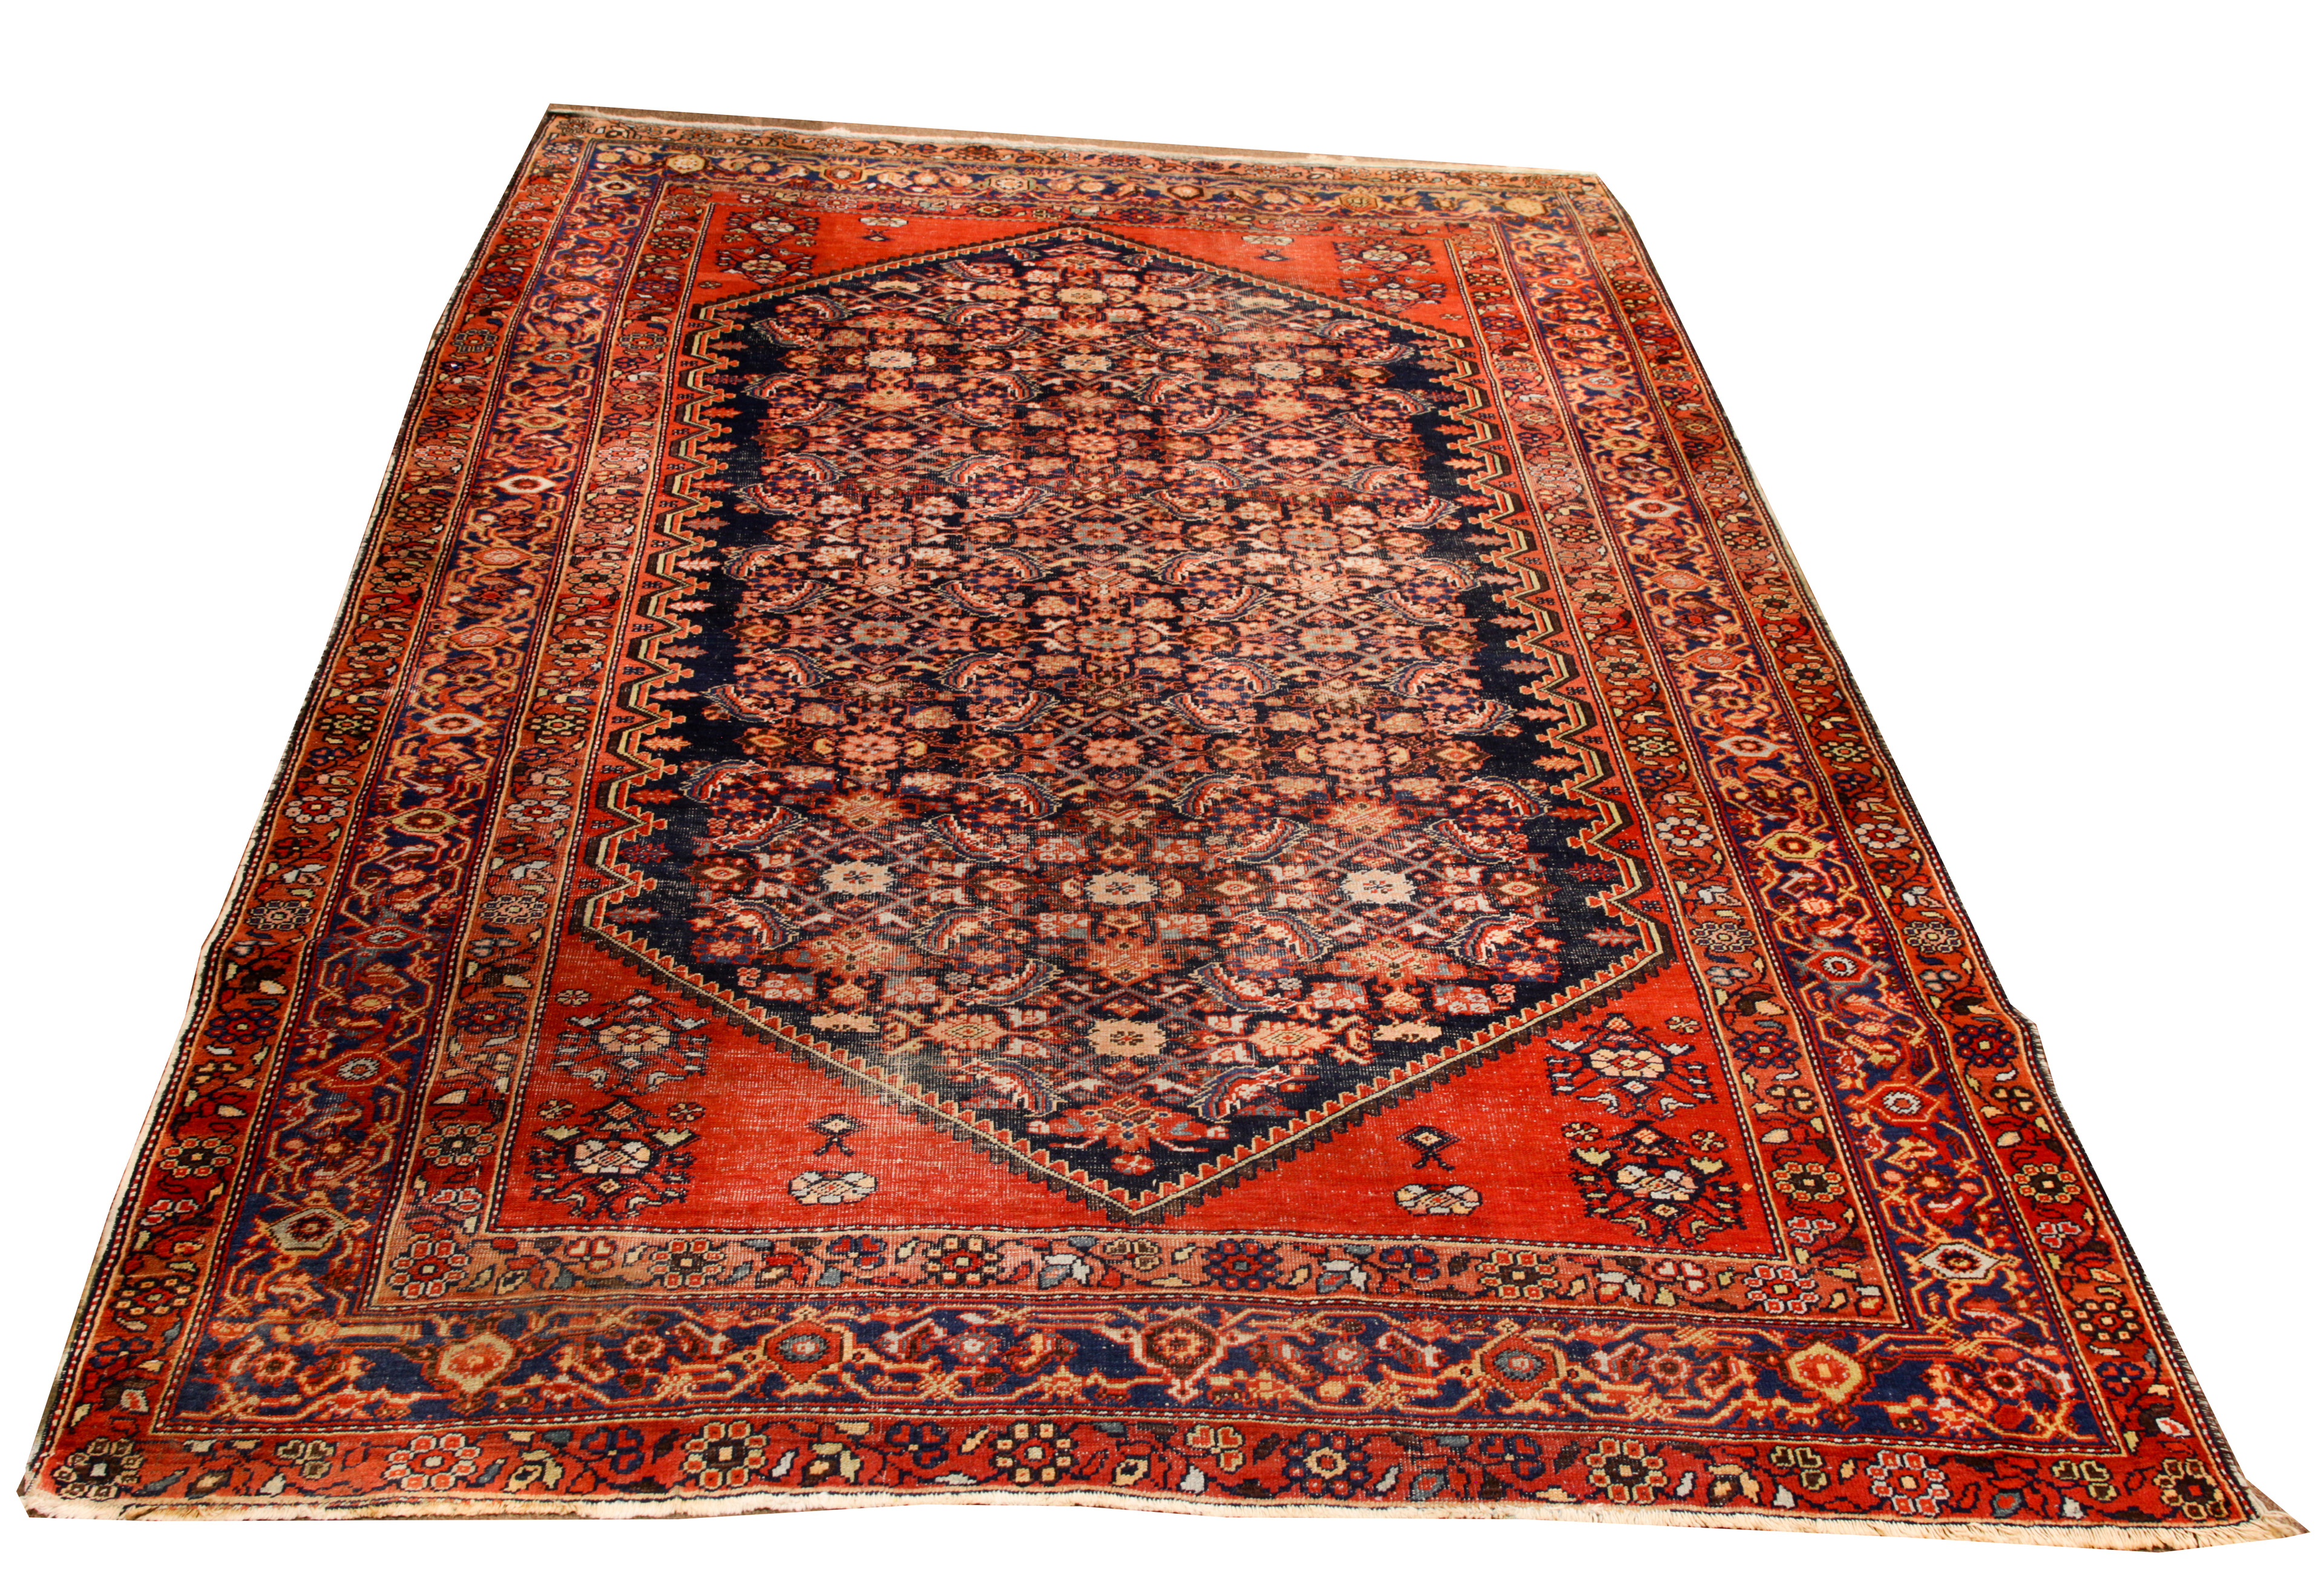 An antique Persian Malayer carpet